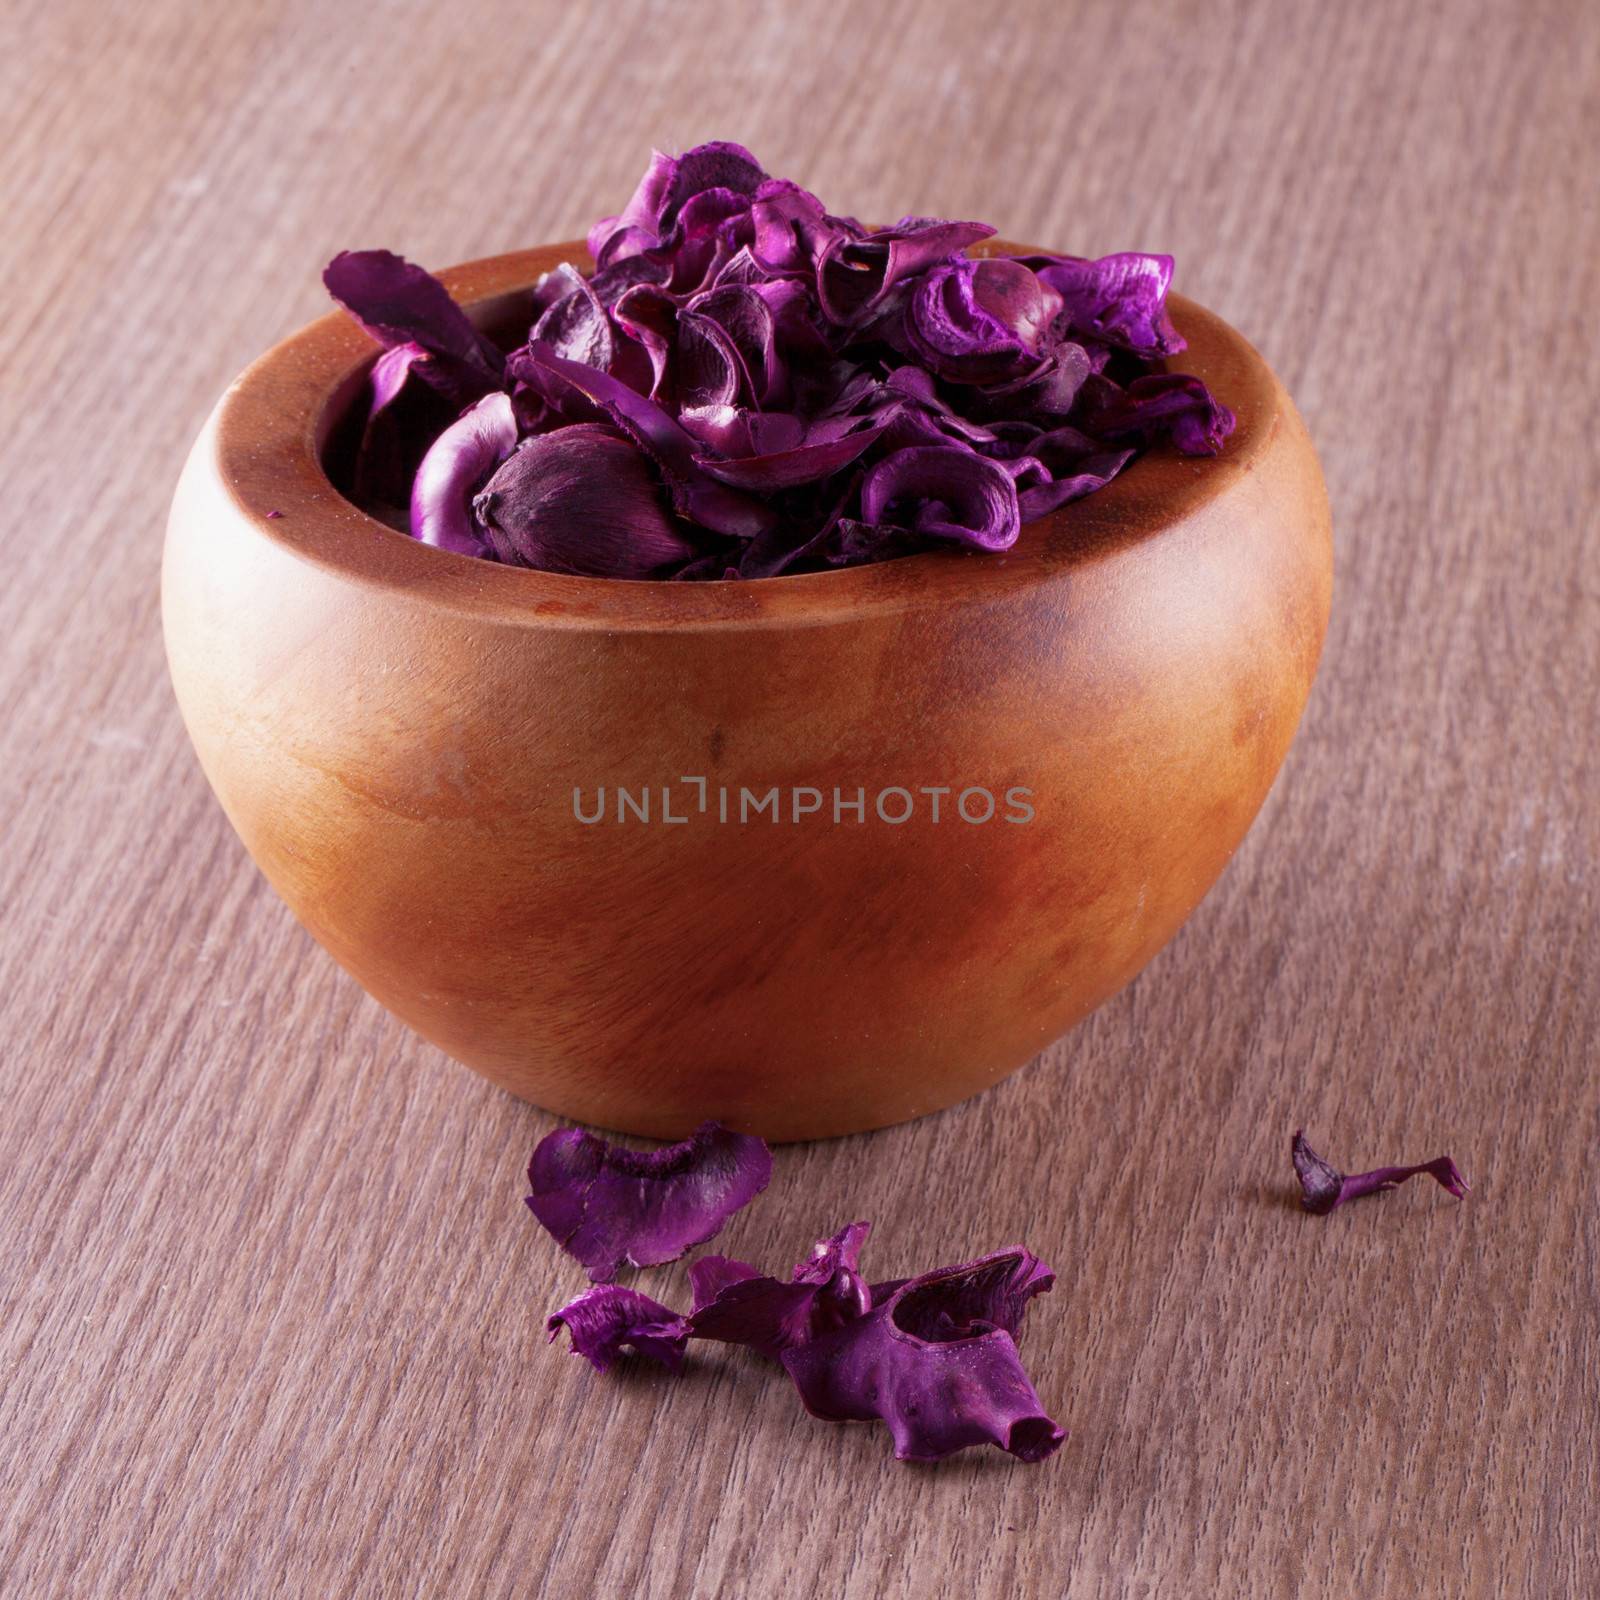 Purple pot pourri in a wooden cup